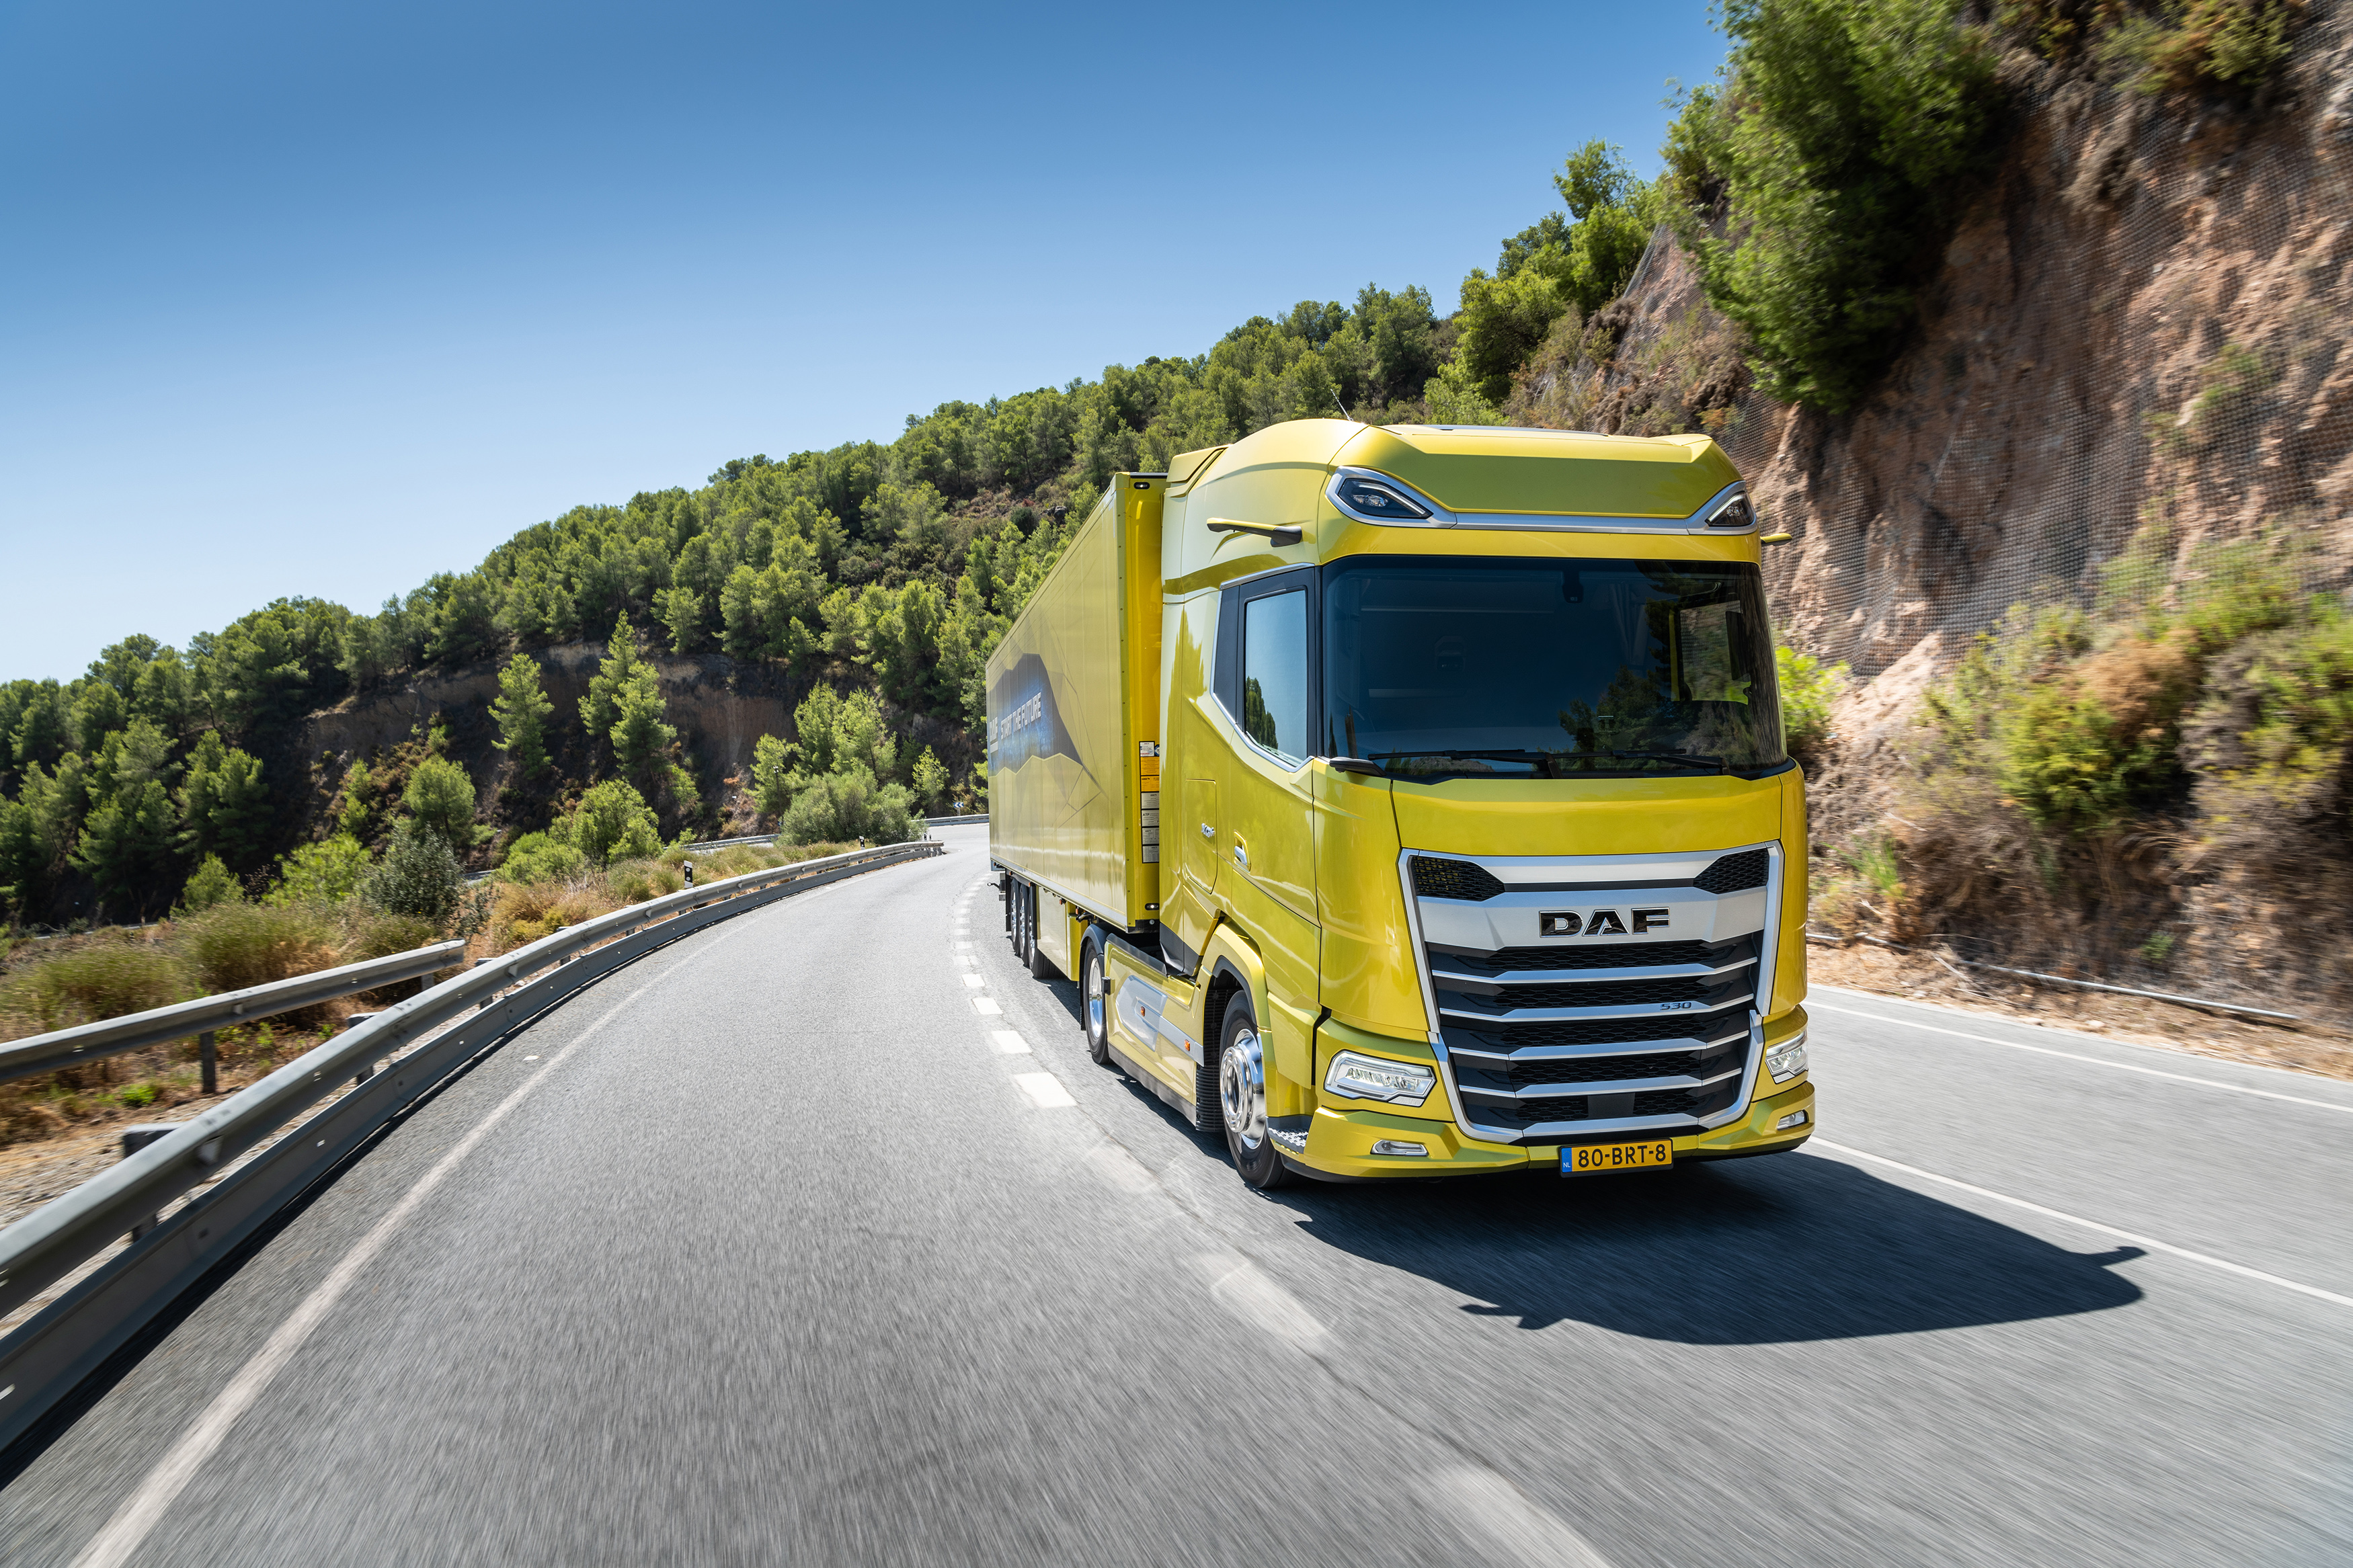 DAF XG Plus New Generation - Truck Trading Mioli